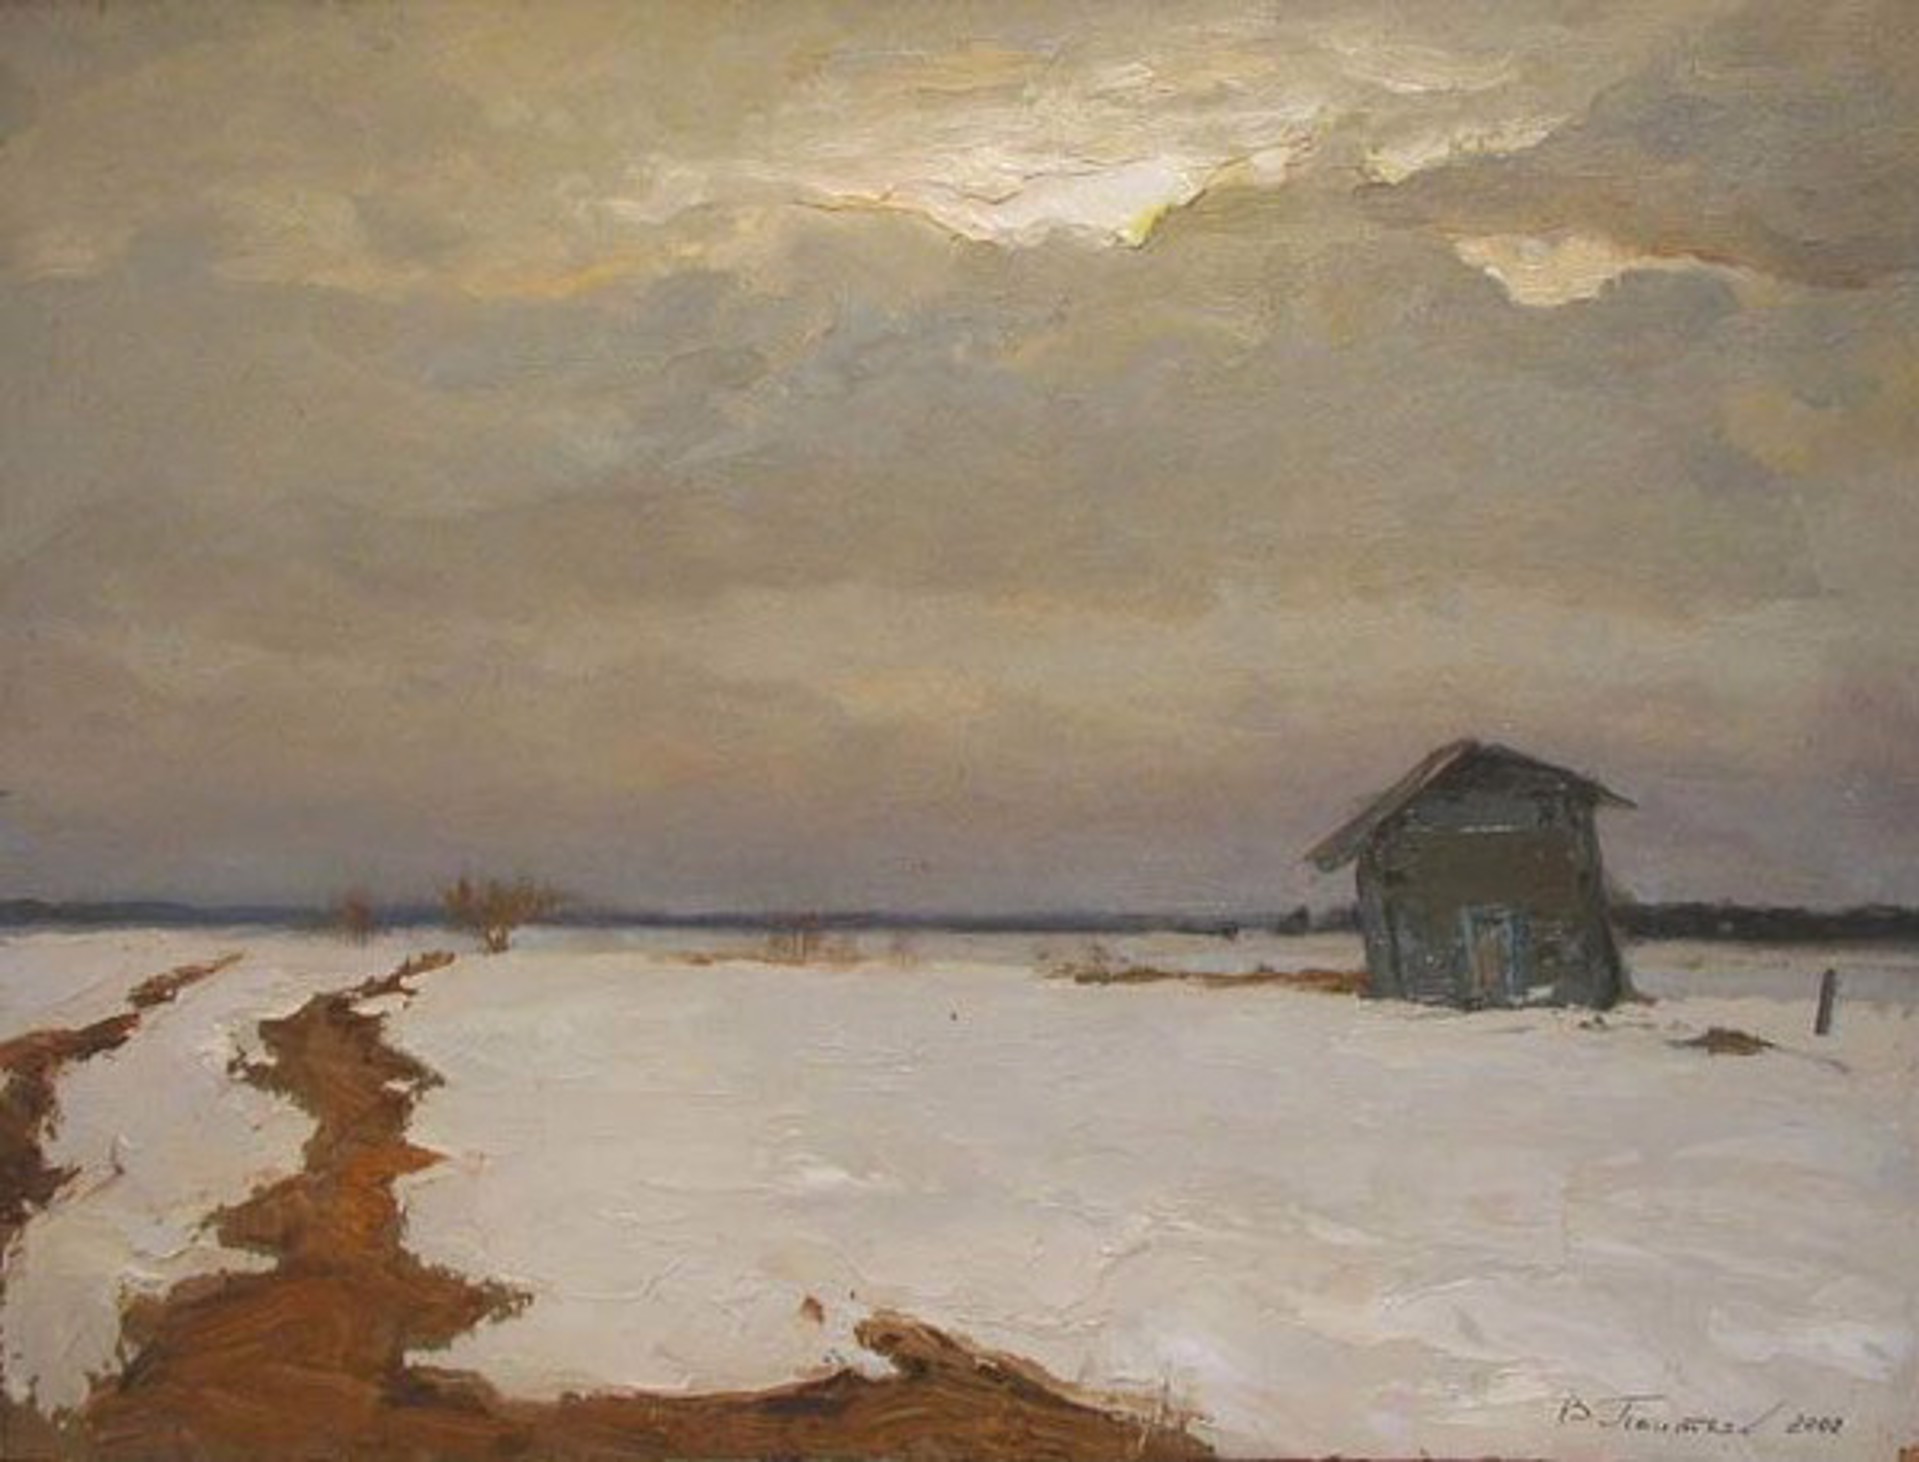 At Dusk by Vladimir Pentjuh